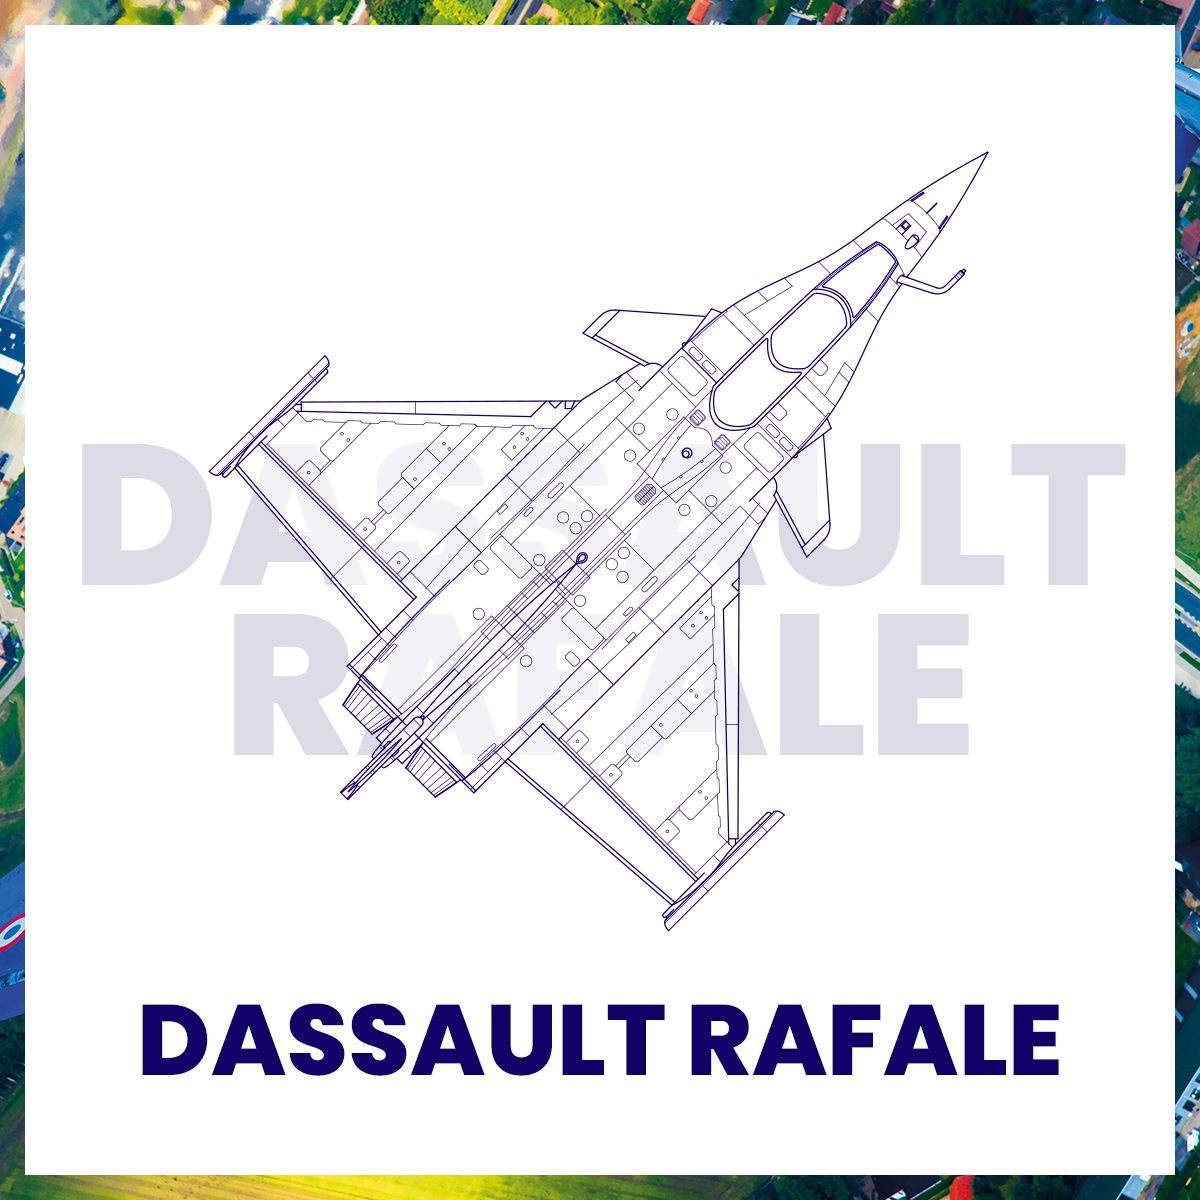 AeroPuzzle flight puzzle - Dassault Rafale